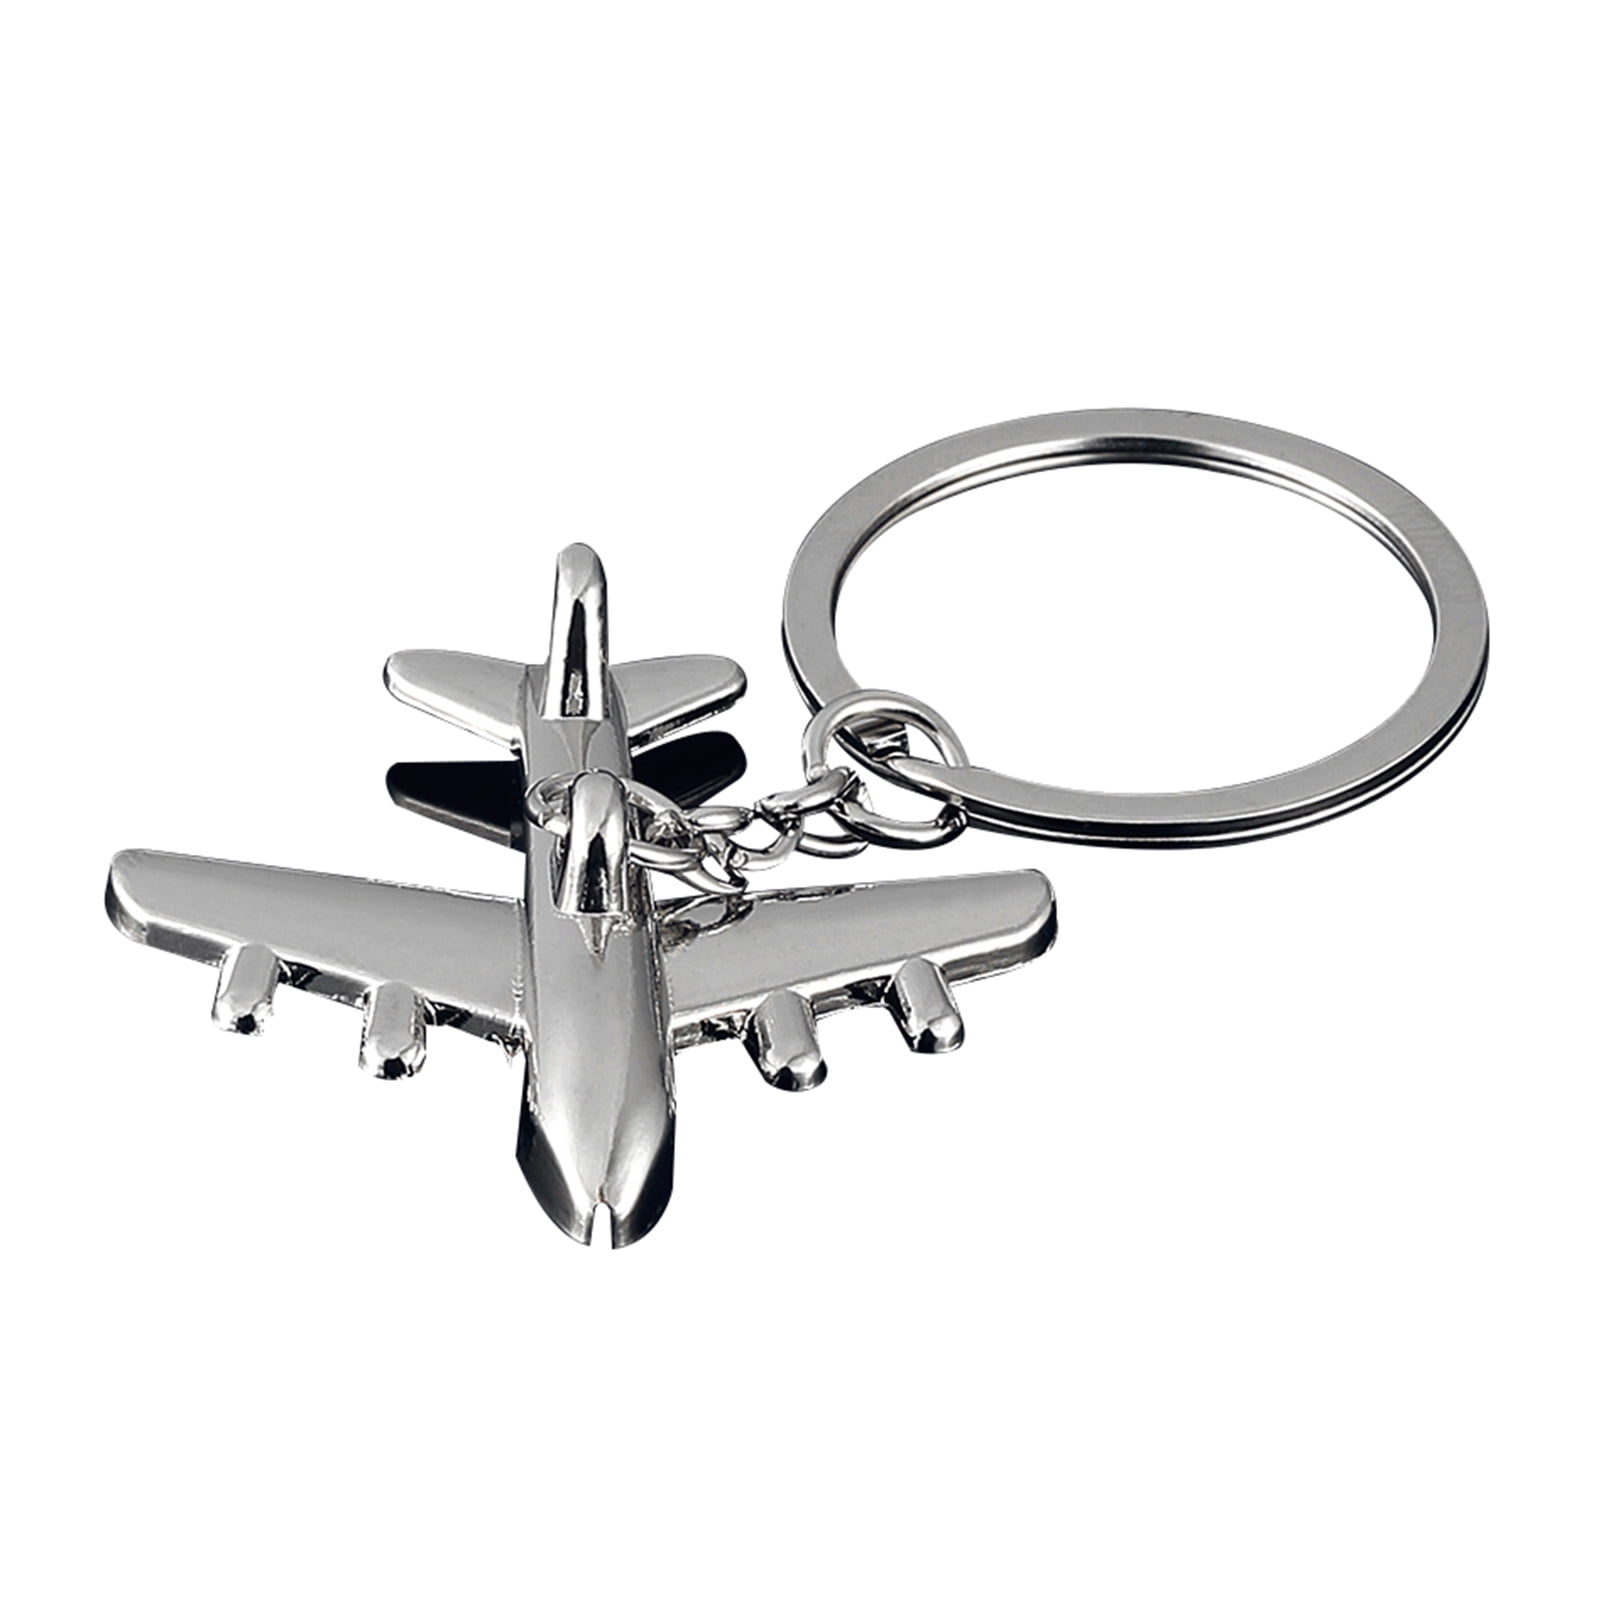 Cute Plane Aircraft Keychain KeyRing Pendant Gift Present Creative LP 